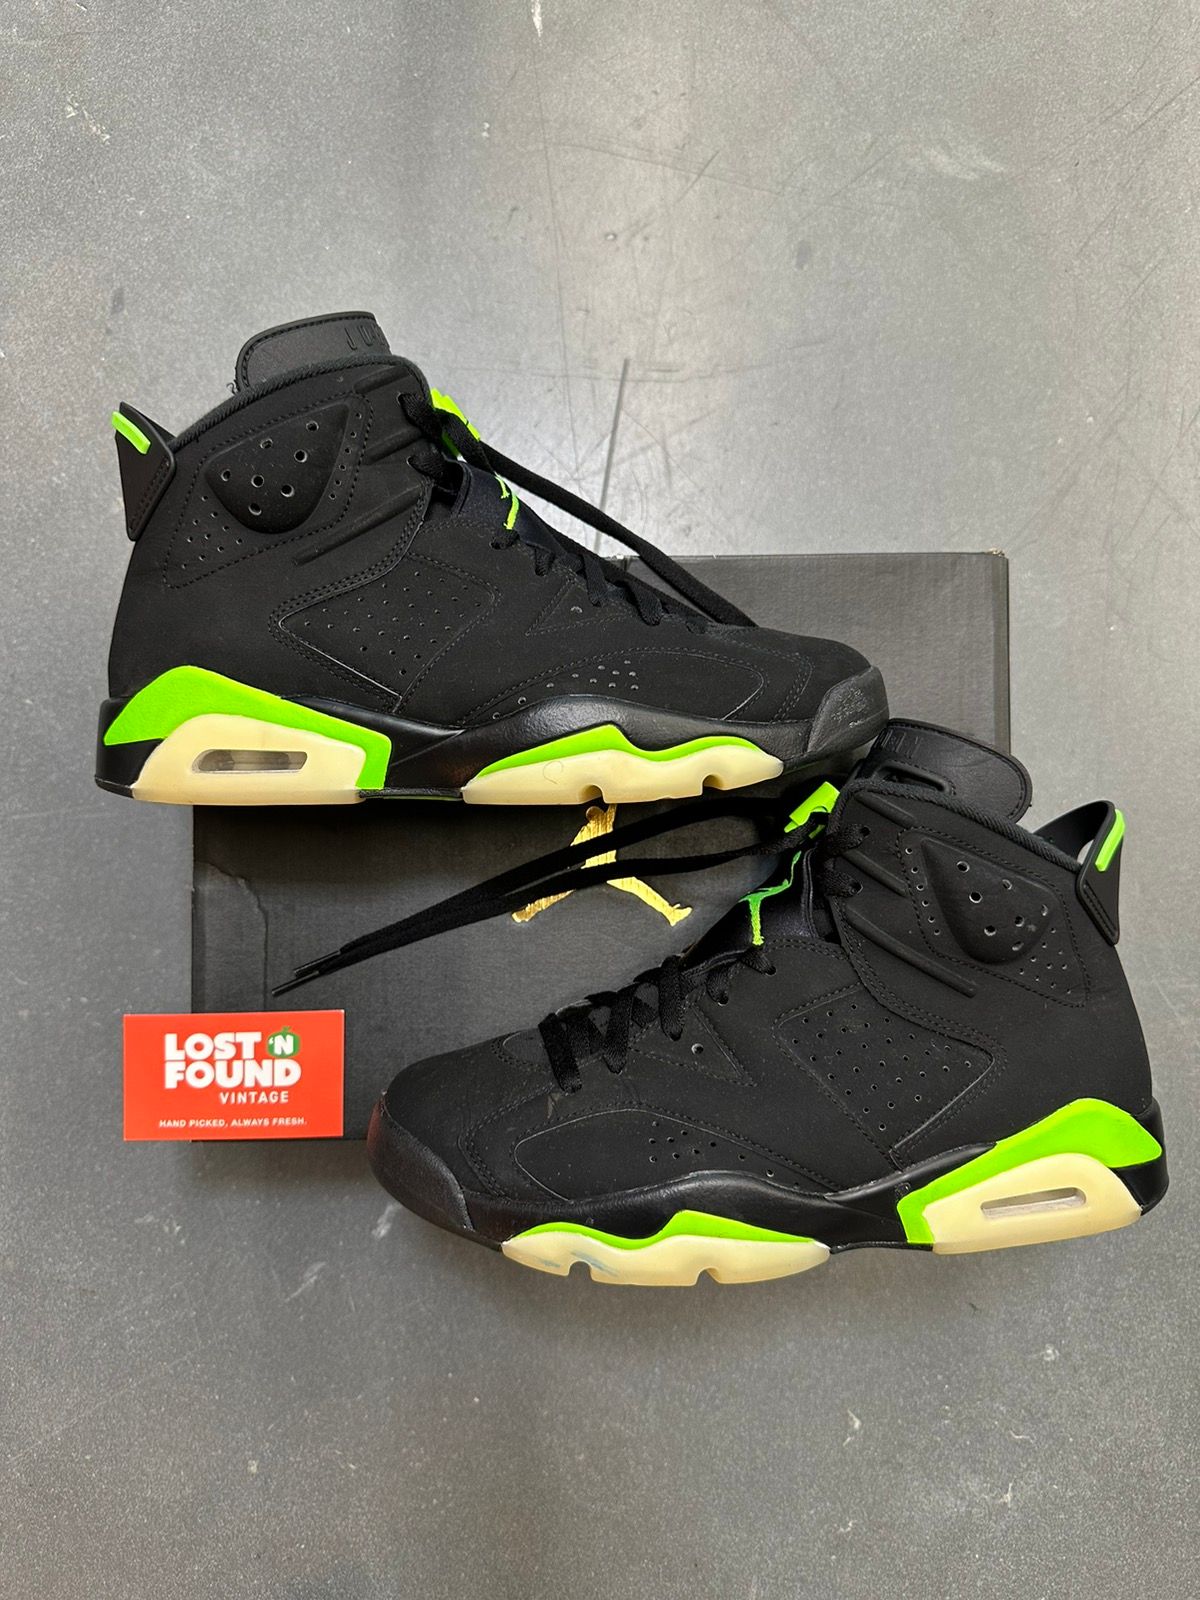 Pre-owned Jordan Brand 2020 Jordan 6 Retro Electric Green Size 9.5 Shoes In Black